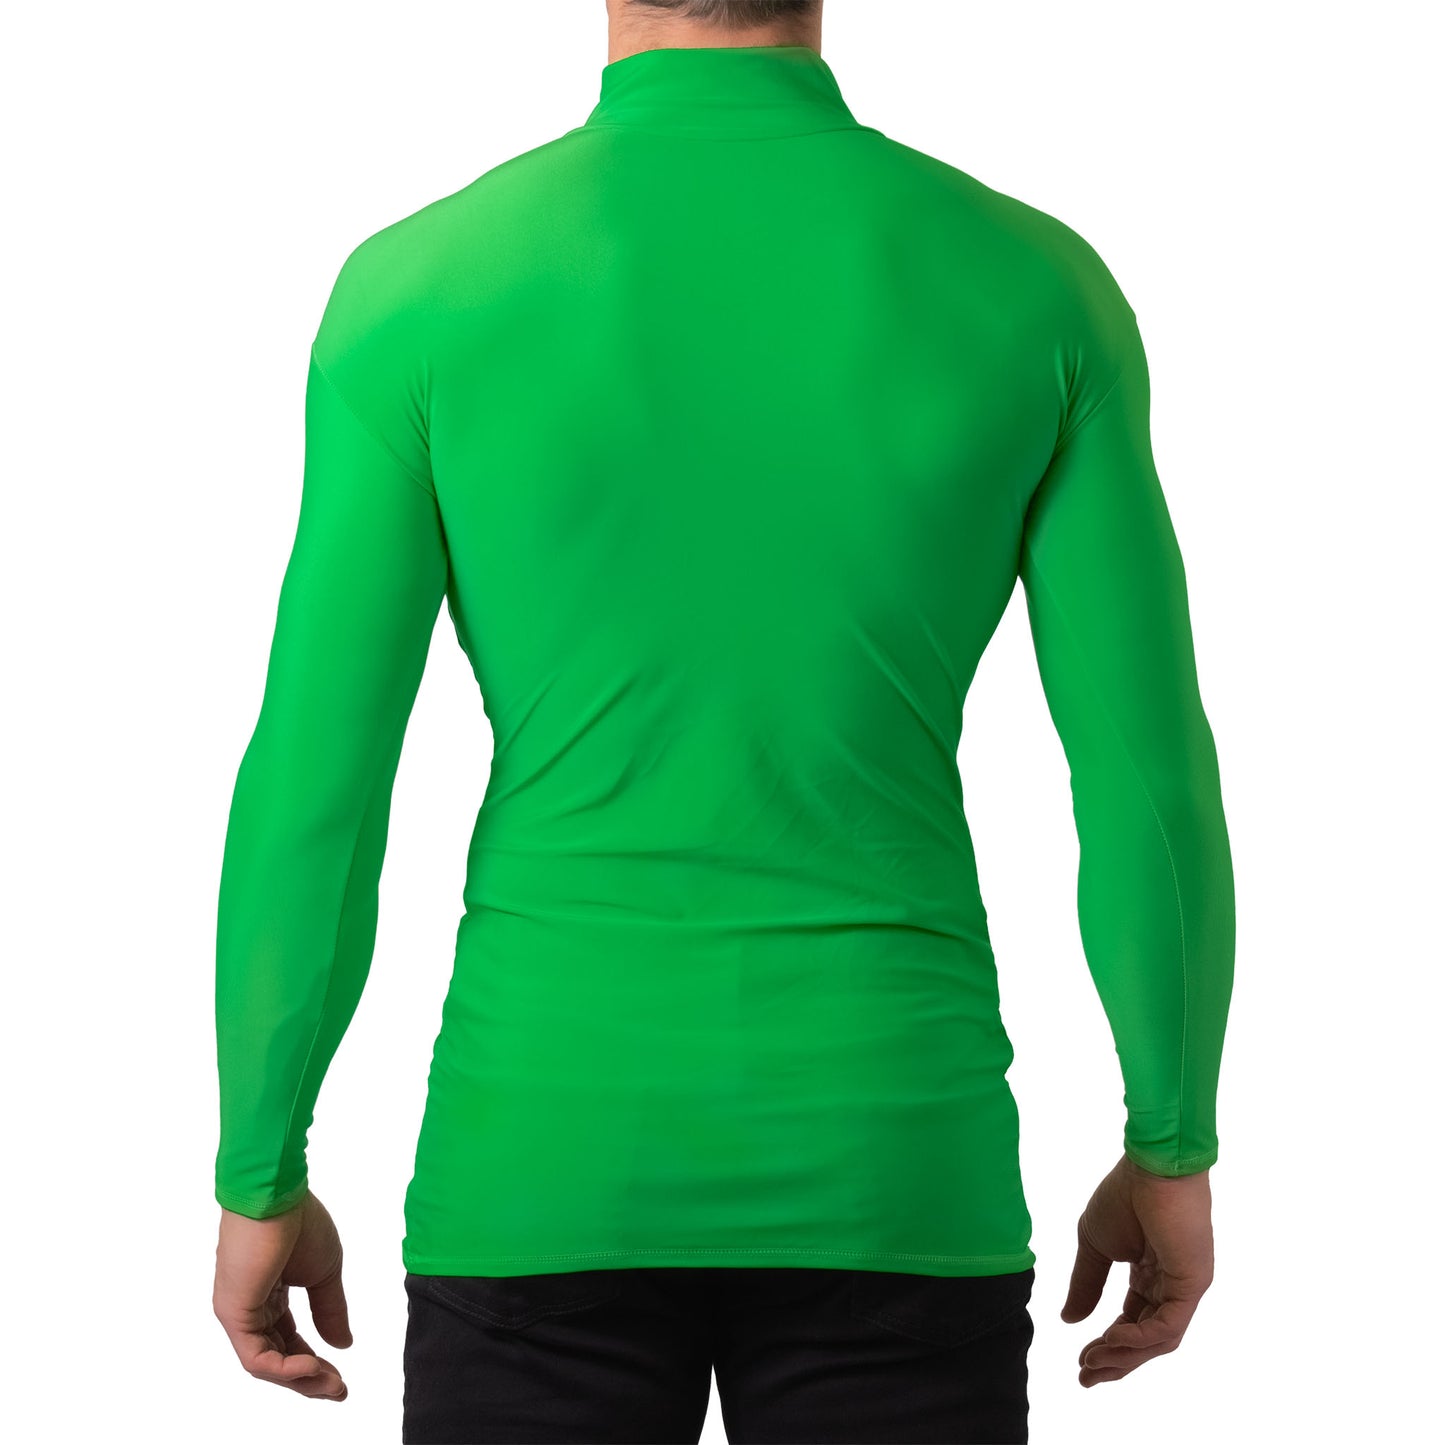 chroma key green screen shirt back